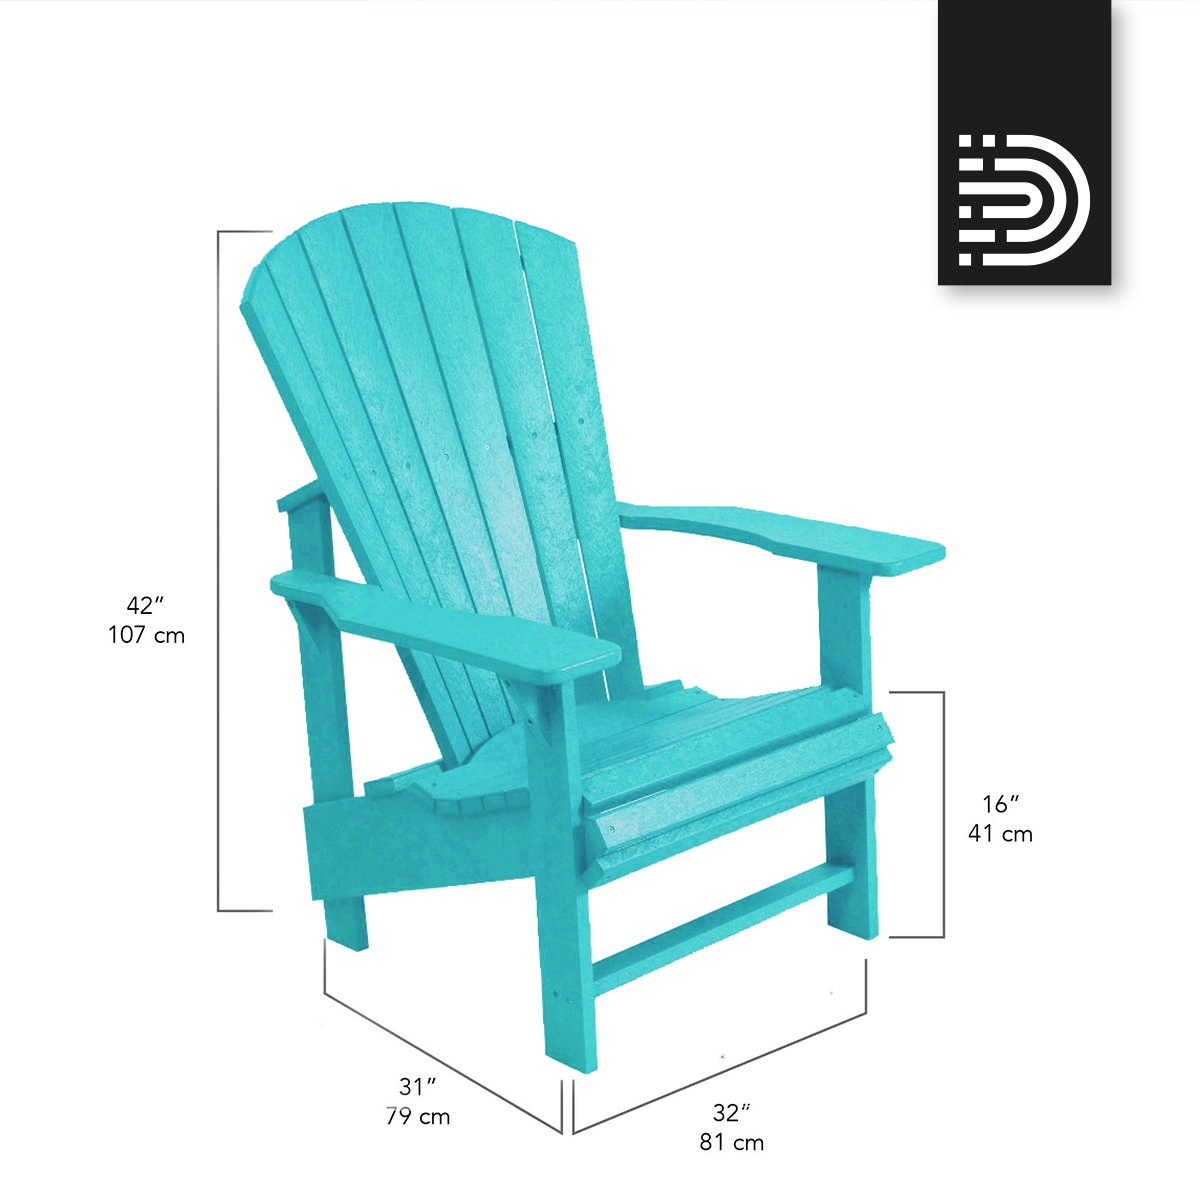 C03 Upright Adirondack Chair - türkis 09